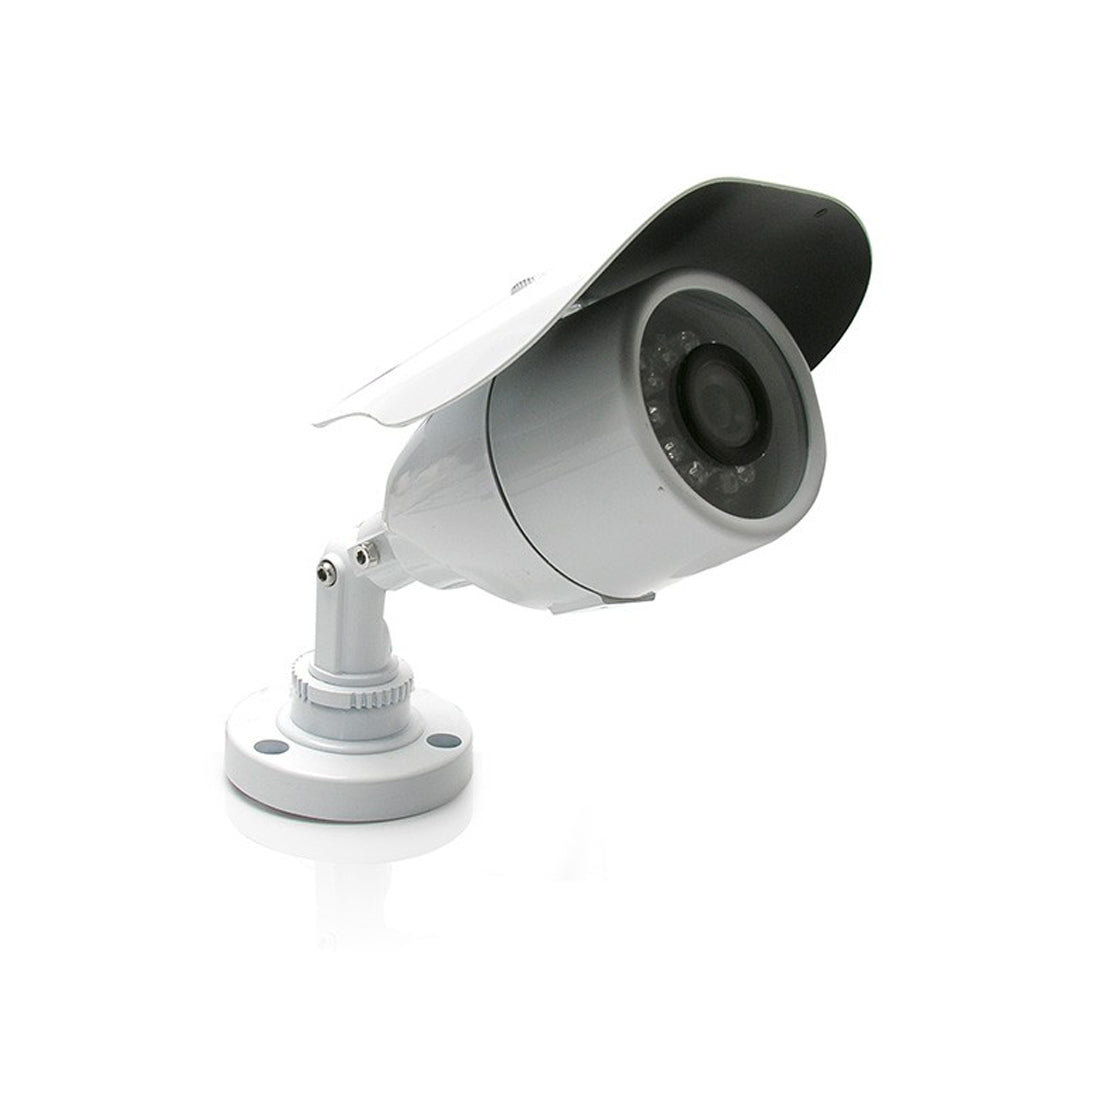 Avidsen Videocamera di sorveglianza orientabile a 360°, visione notturna a infrarossi, telecamera per videocitofono